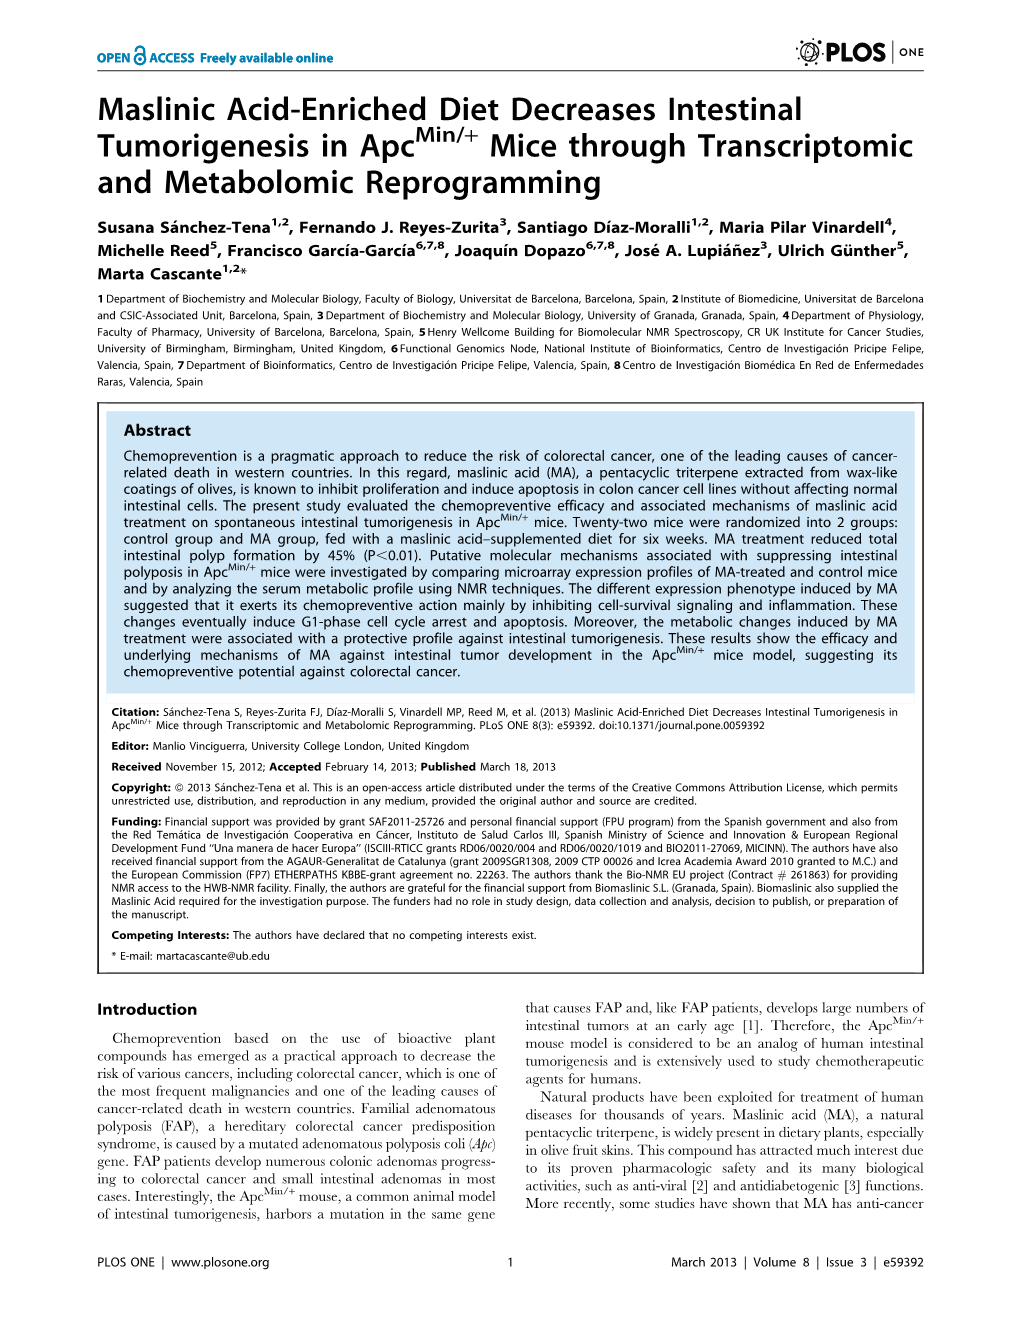 Maslinic Acid-Enriched Diet Decreases Intestinal Tumorigenesis in Apcmin/+ Mice Through Transcriptomic and Metabolomic Reprogramming